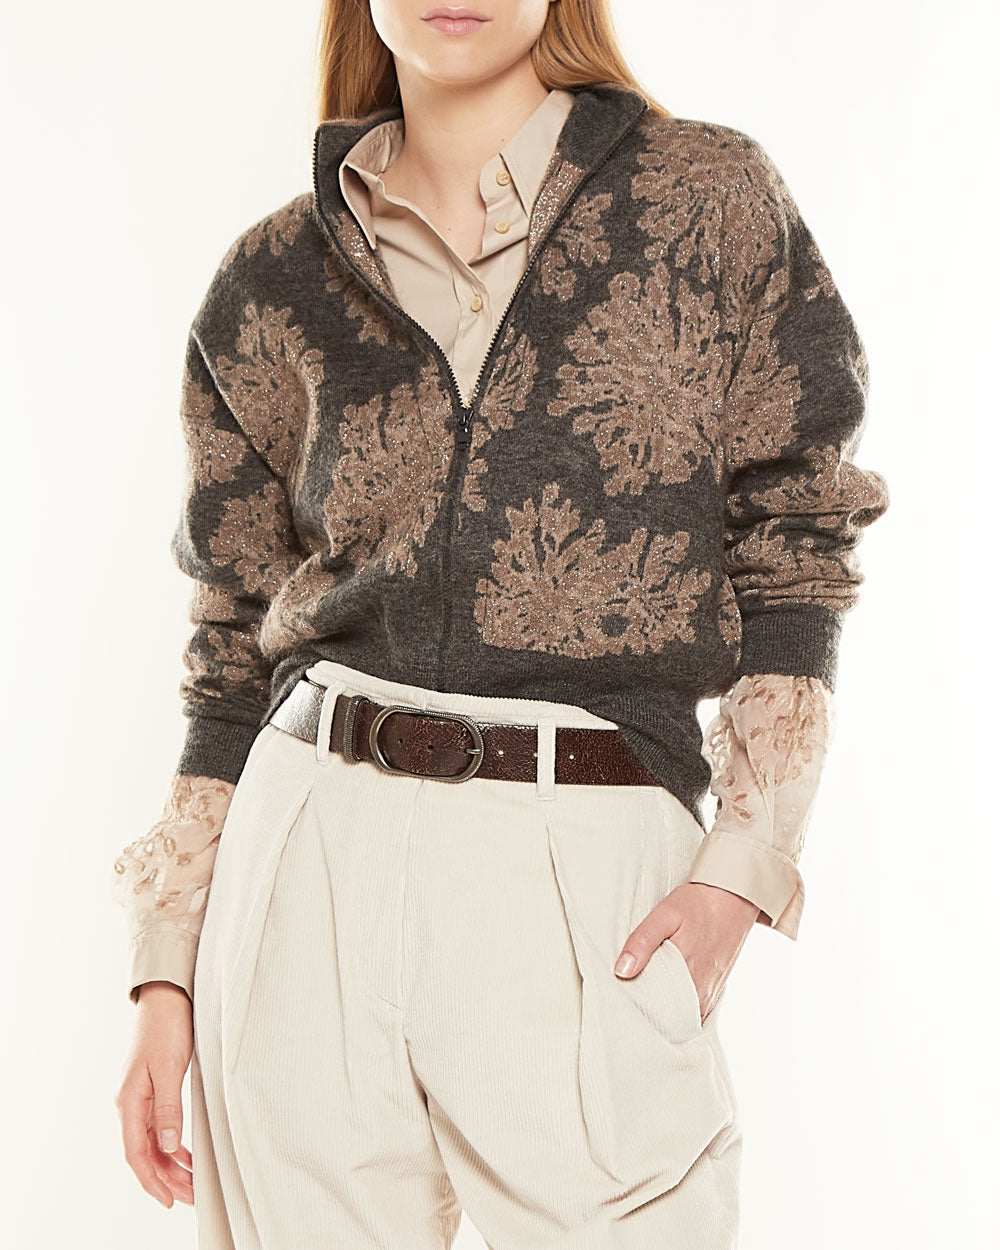 Charcoal Floral Motif Zip Front Knit Jacket